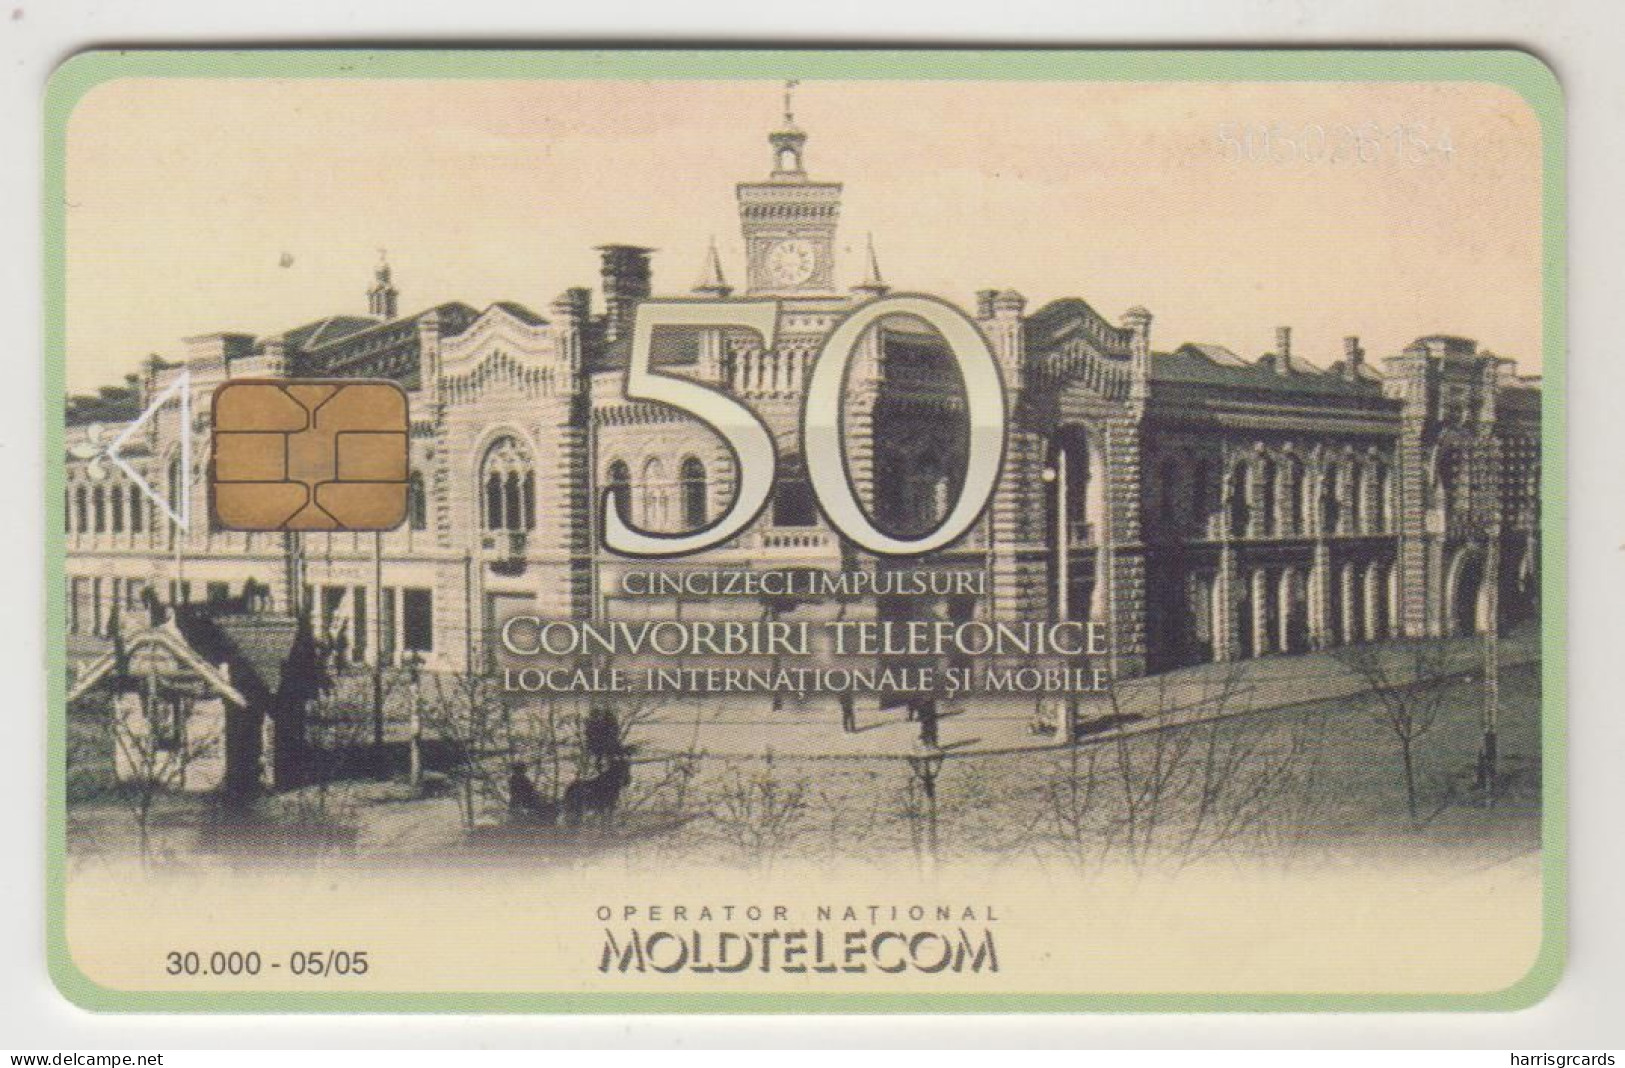 MOLDOVA - Passaj, Chip:CHT08, Moldtelecom 50 Units, 05/05, Tirage 30.000,used - Moldova